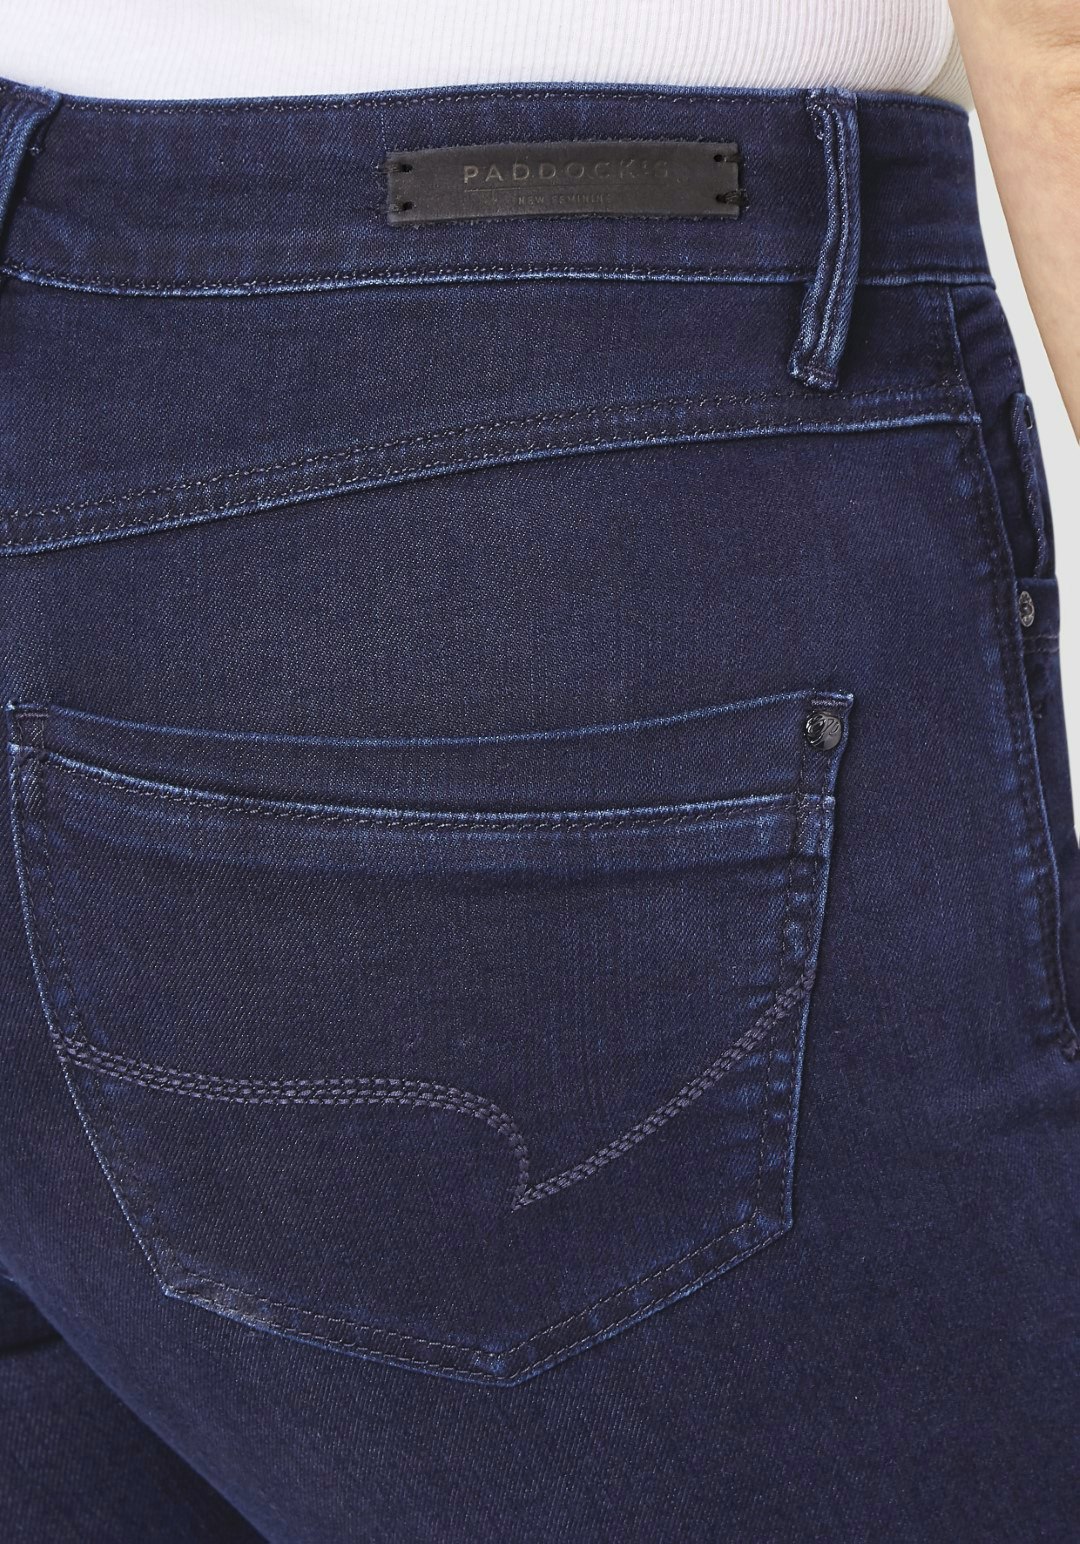 Paddock's Pat Jeans Slim Fit blue/black